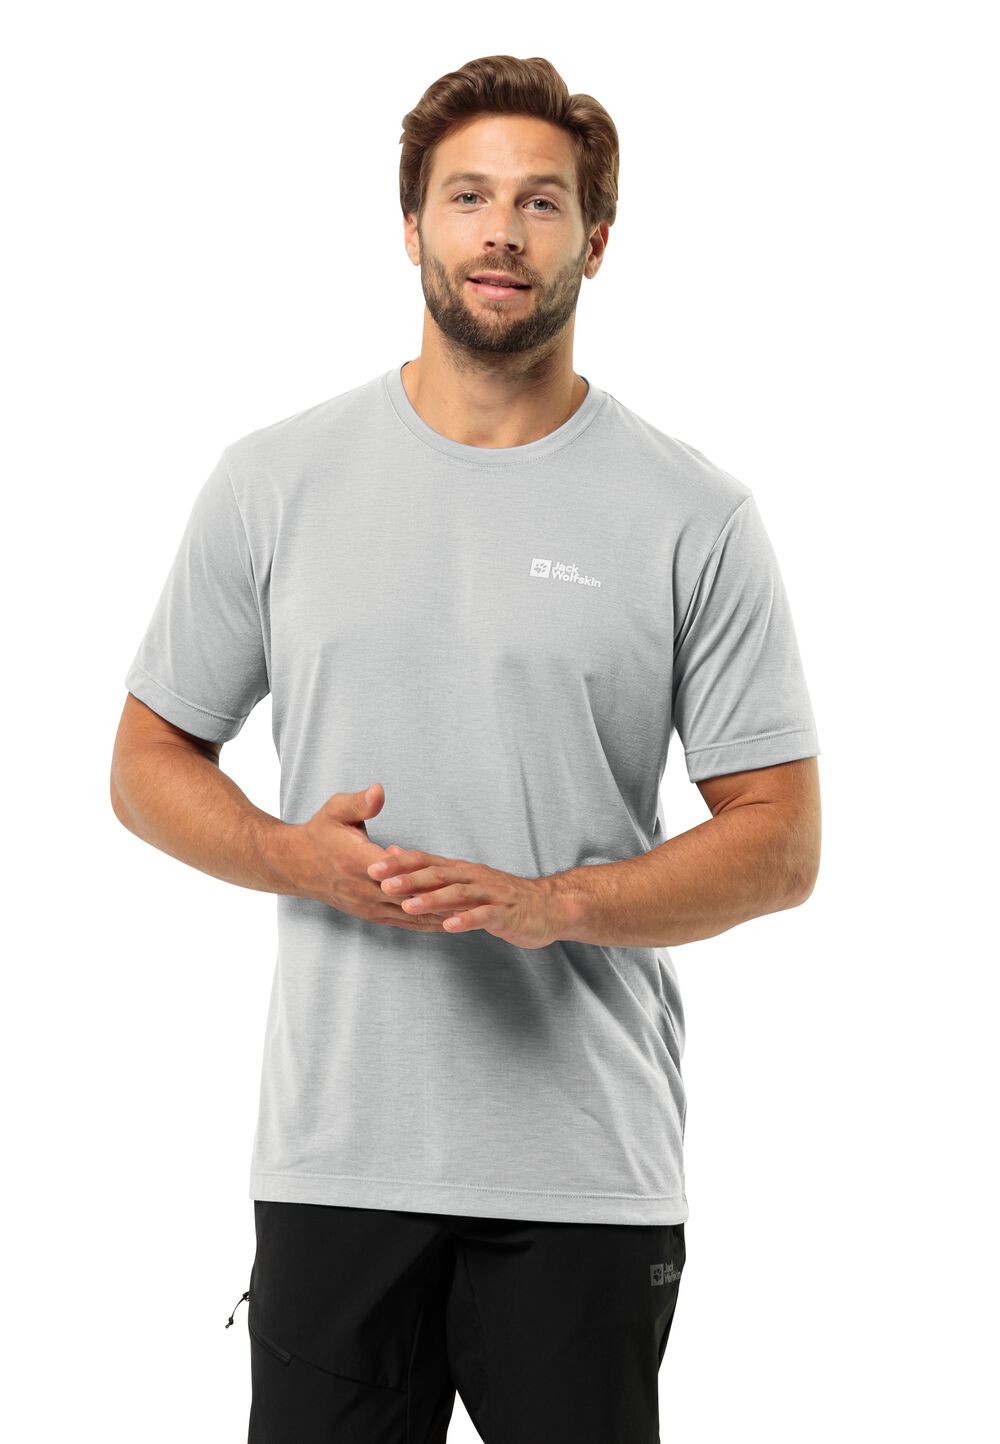 Jack Wolfskin Vonnan S S T-Shirt Men Functioneel shirt Heren L grijs cool grey